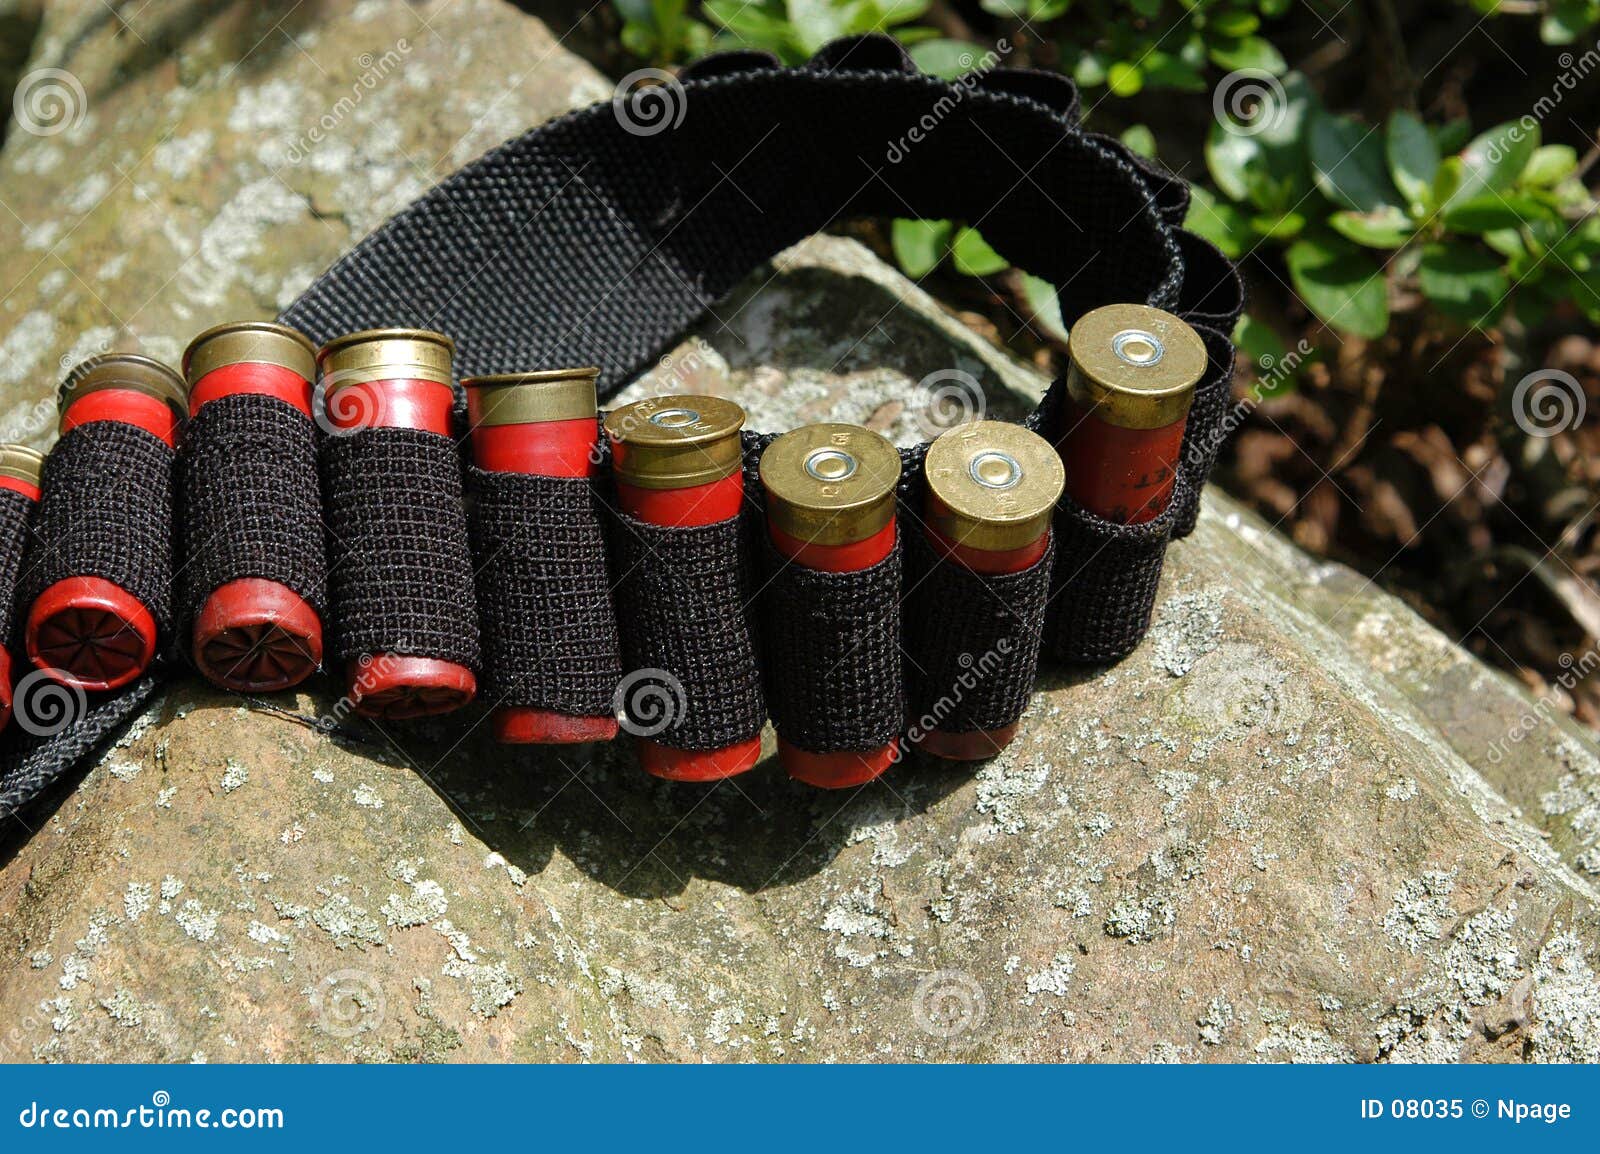 cartridge belt